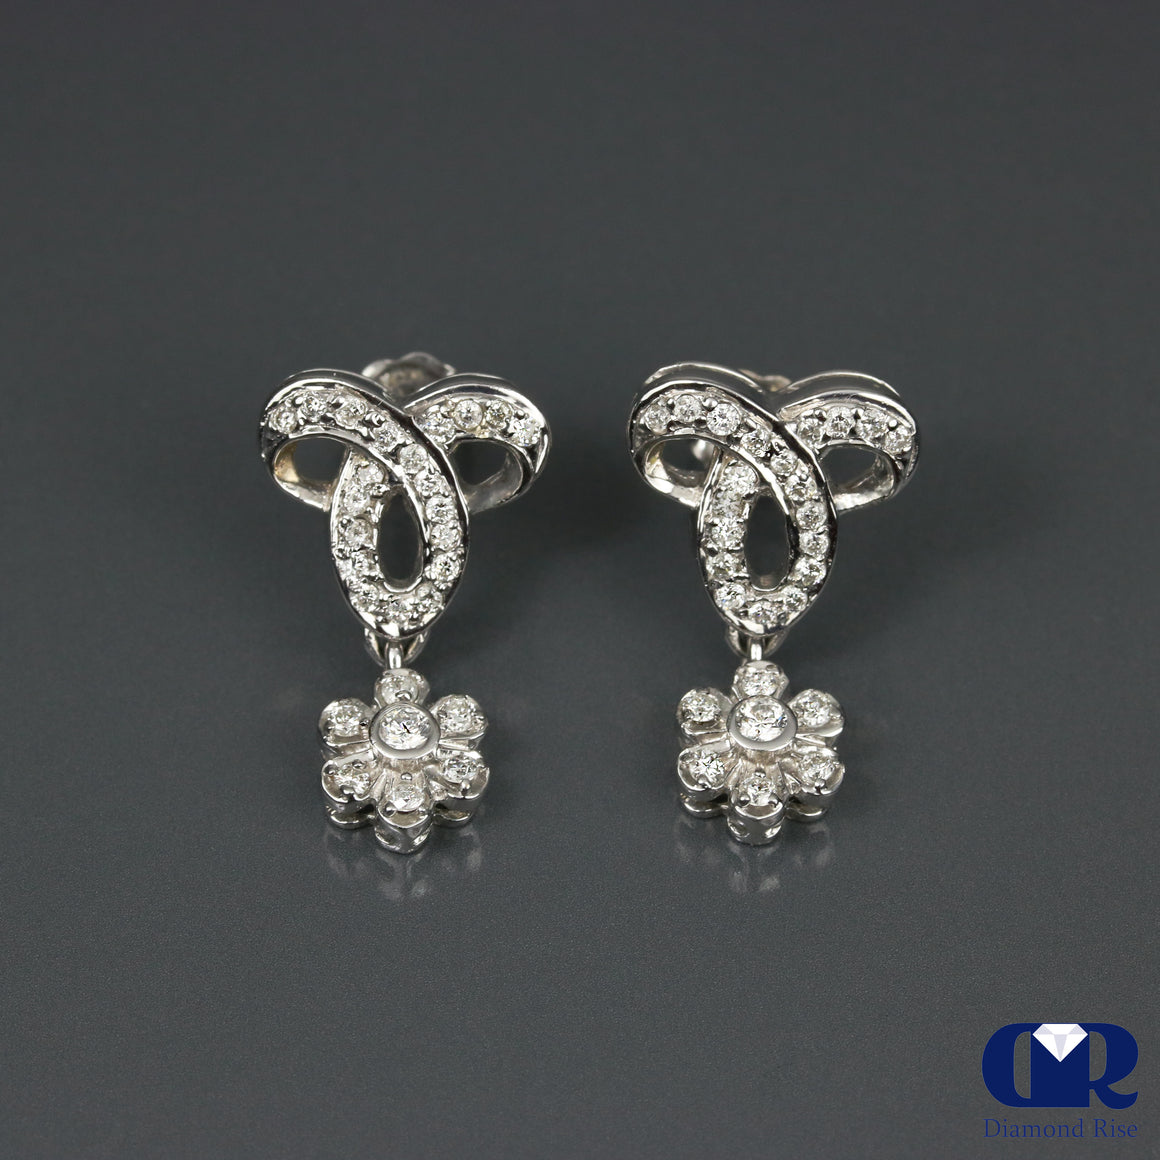 Round Cut Diamond Drop Earrings In 14K White Gold - Diamond Rise Jewelry